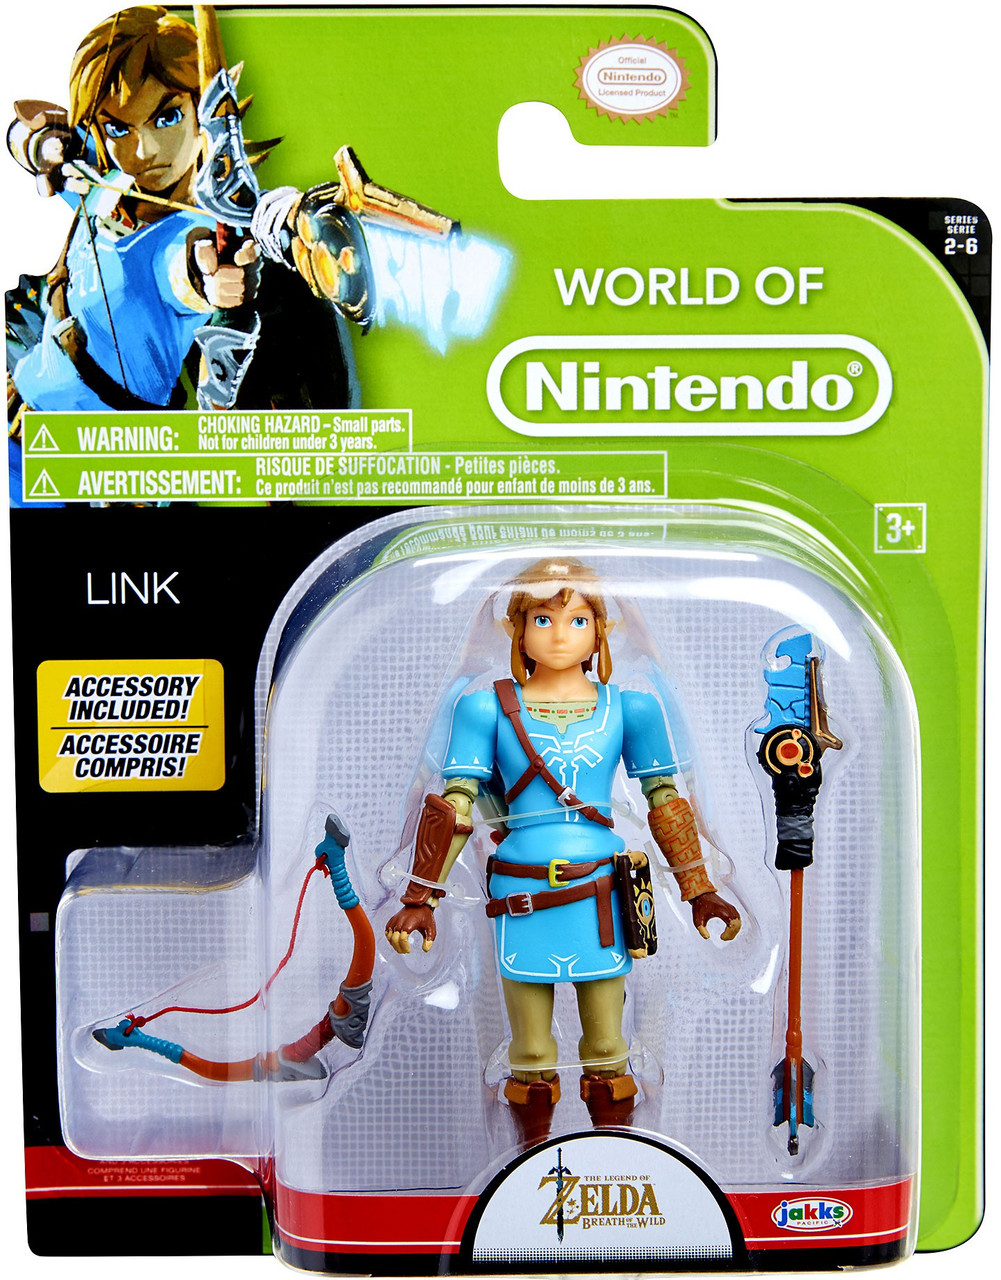 Legend of Zelda Breath of the Wild Link Action Figure - World of